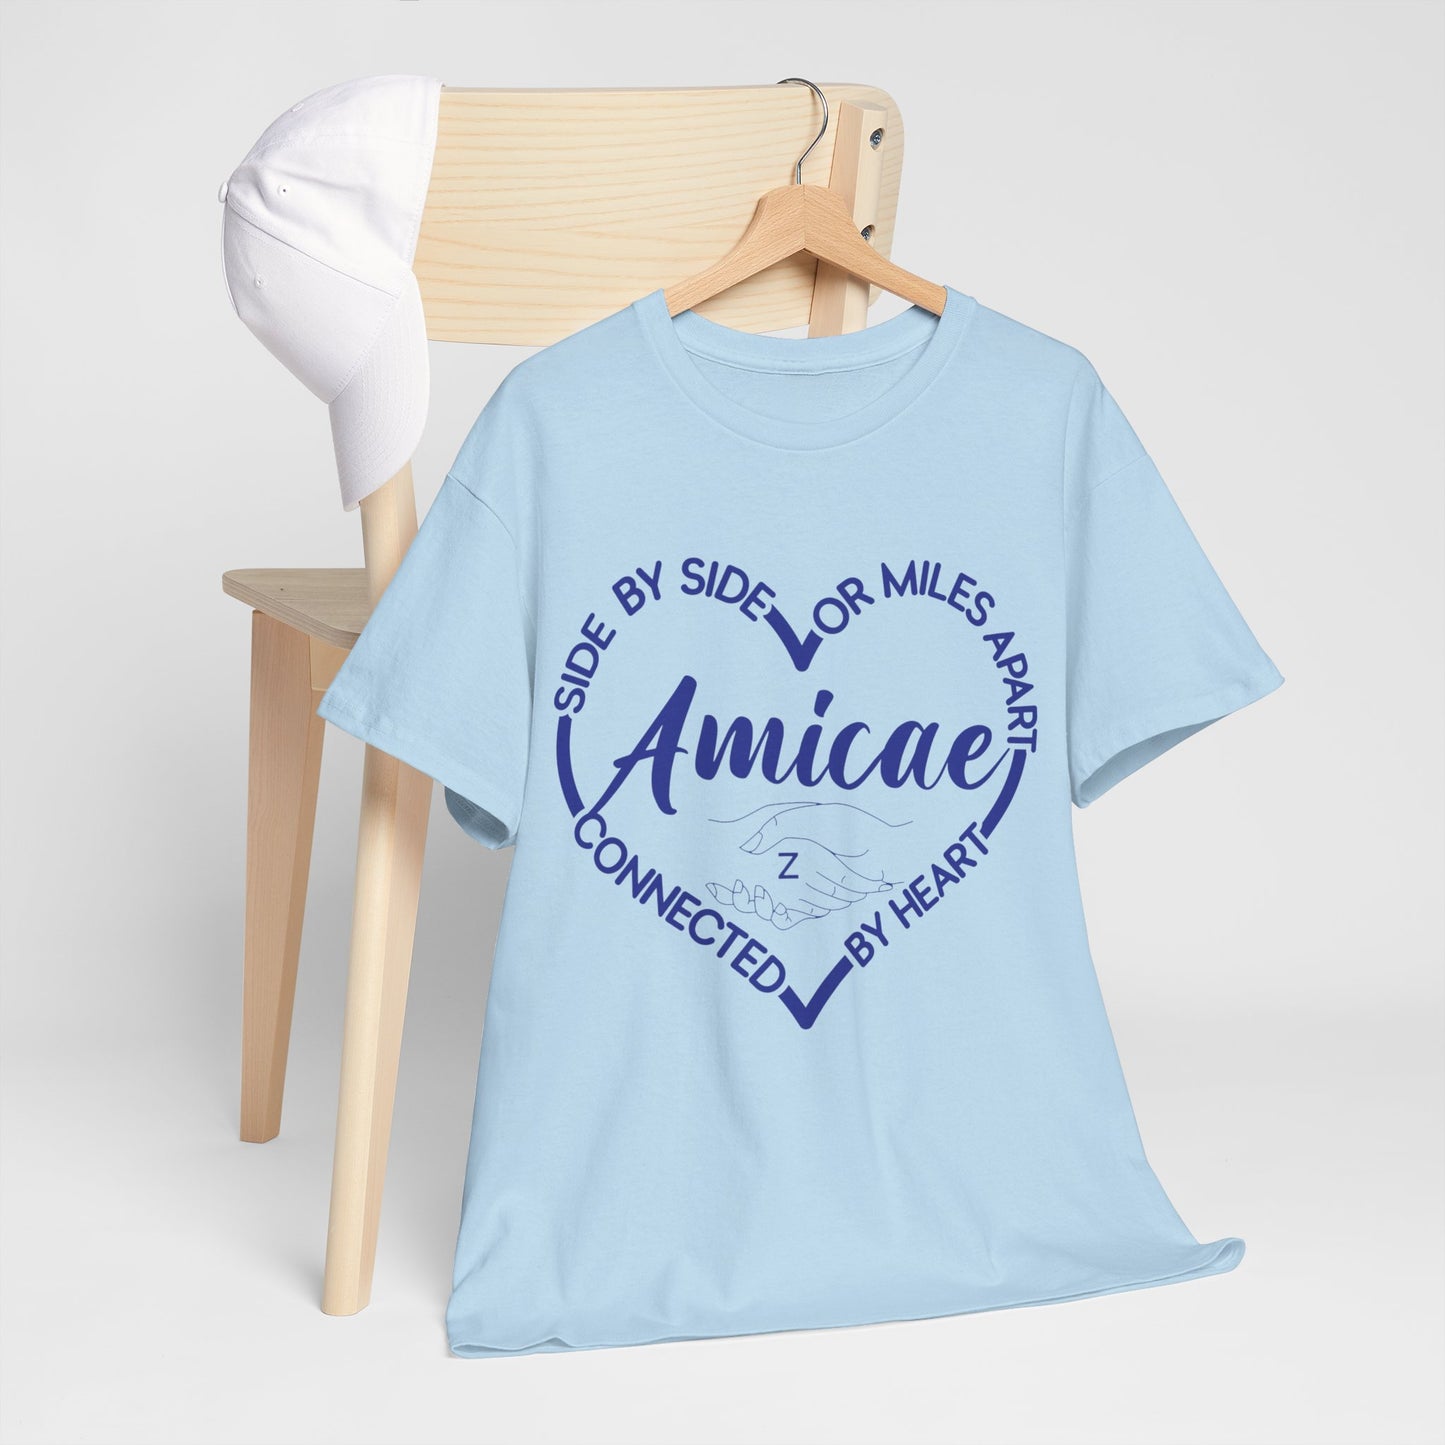 Zeta Amicae "Connected Heart" T-Shirt